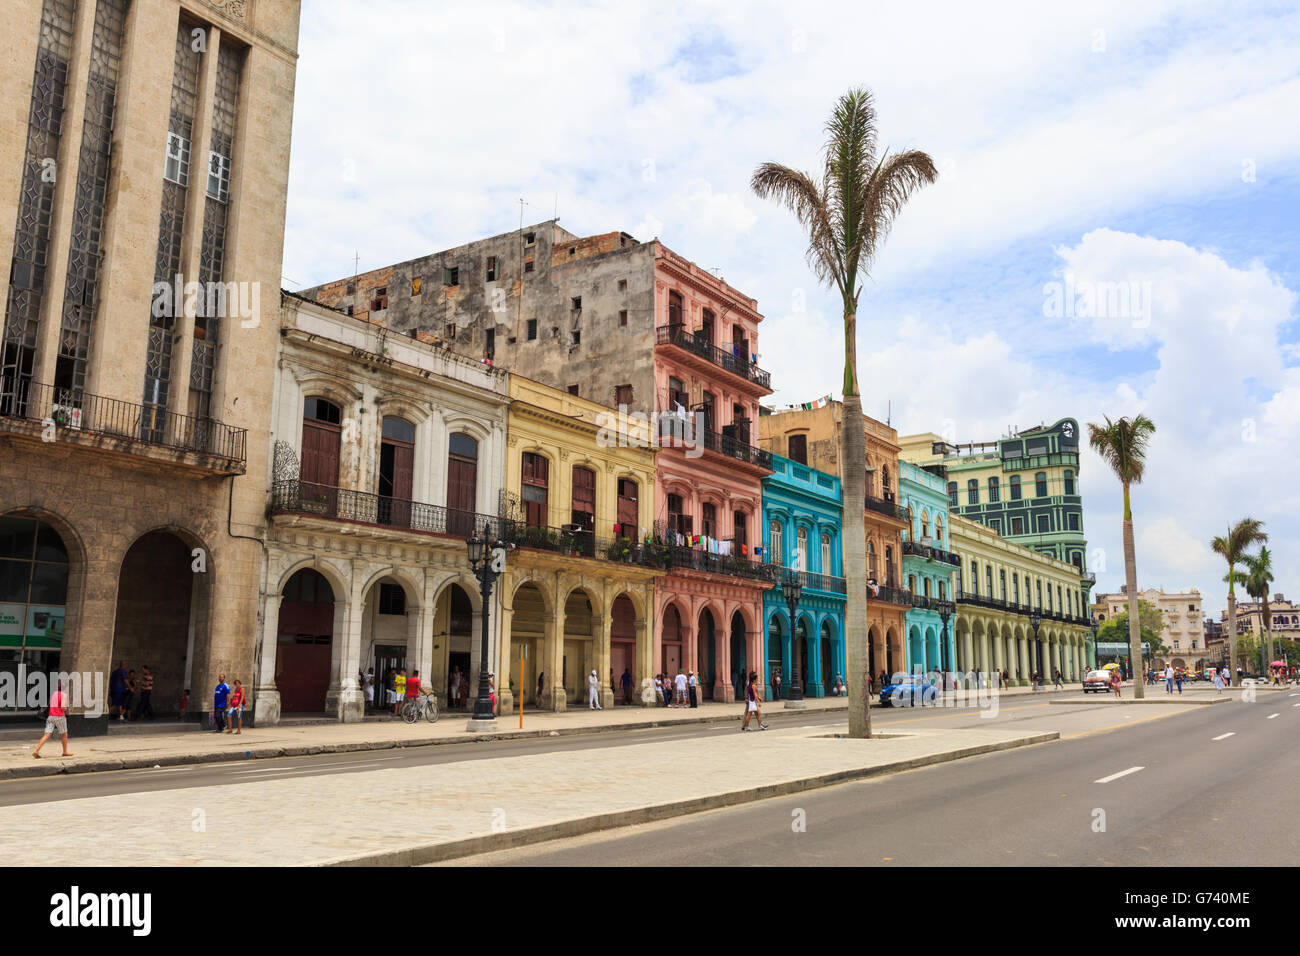 Havana street scene - people walk past colorful houses in Paseo de Marti, Old Havana, Cuba Stock Photo